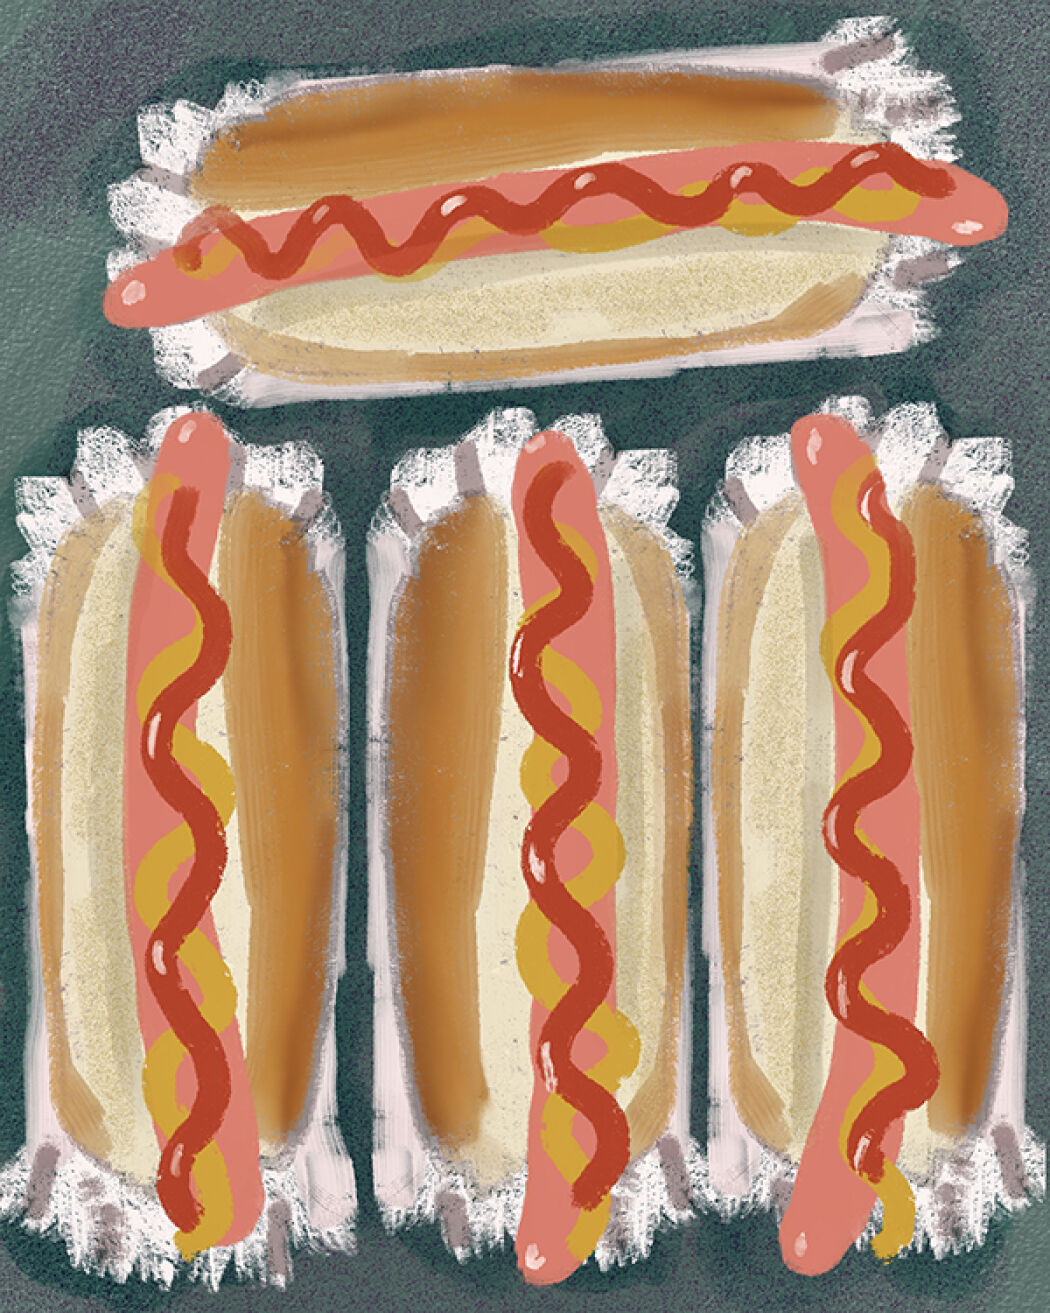 Food illustration by Christina Gliha for Bon Appetit Magazine